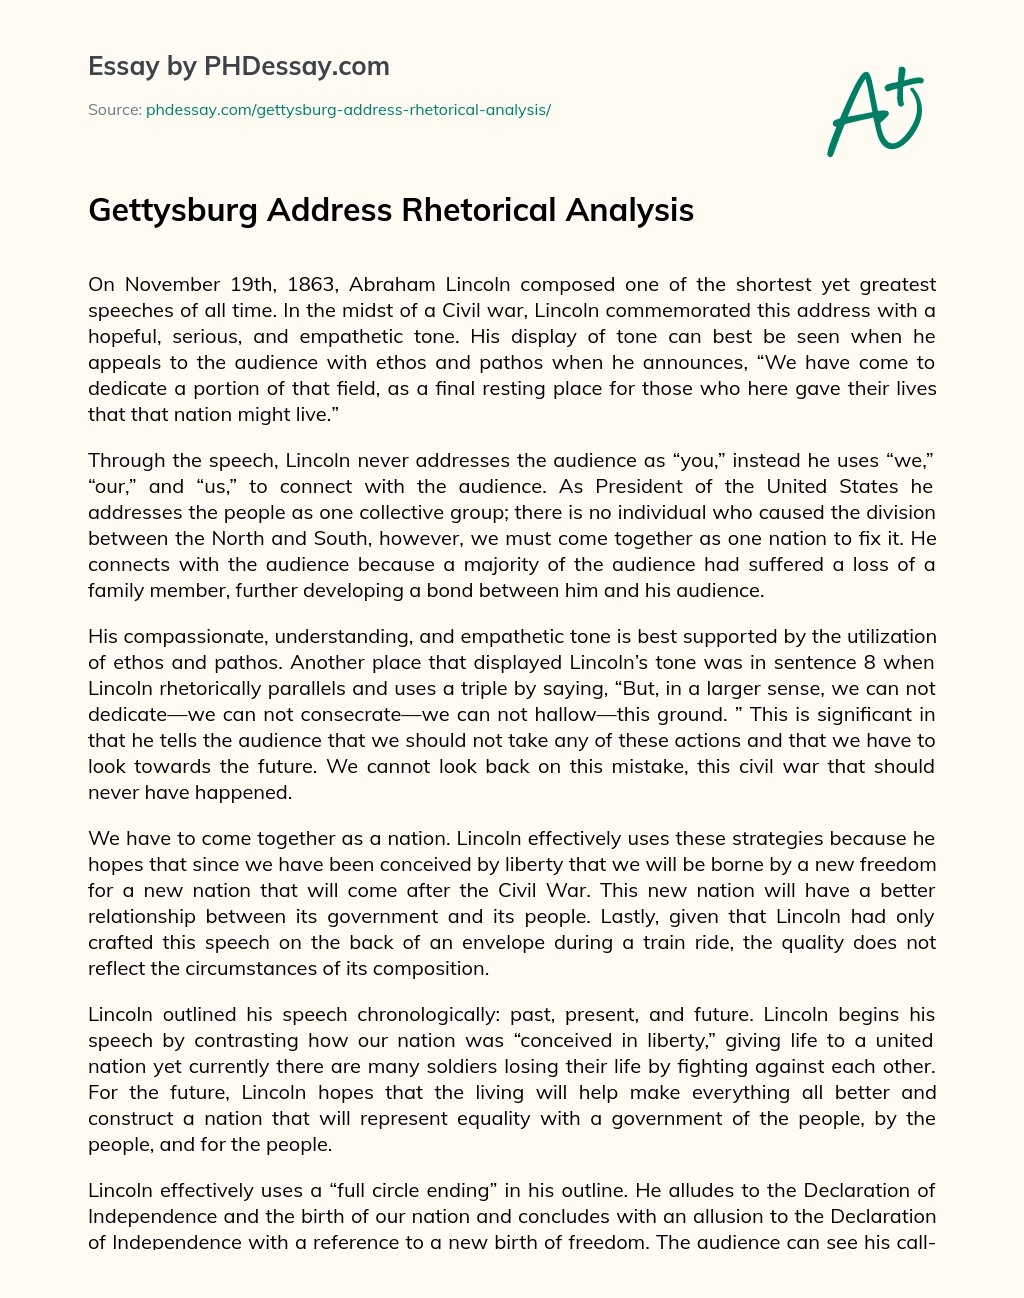 Gettysburg Address Rhetorical Analysis essay